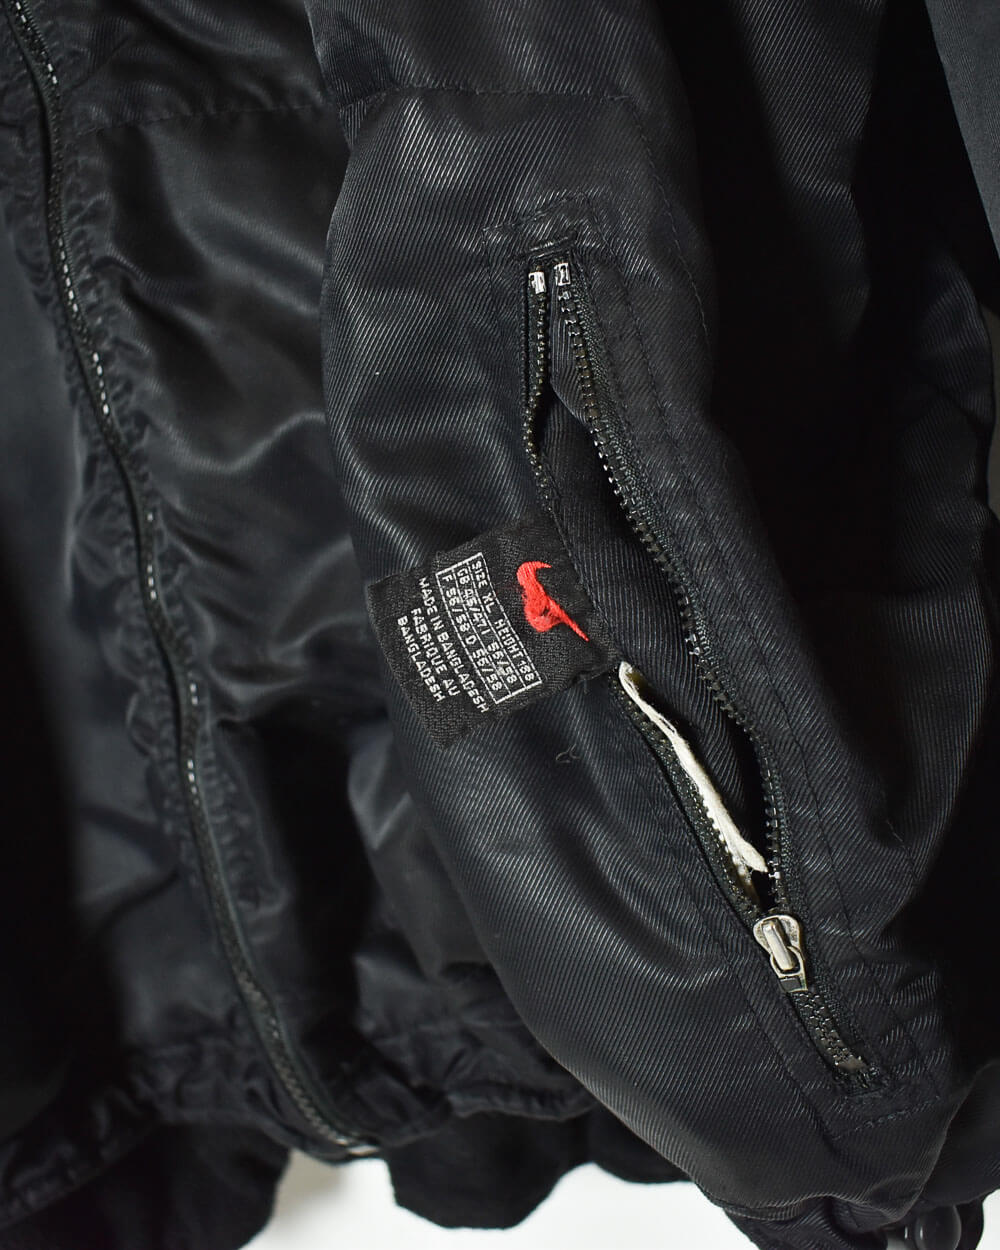 Black Nike Reversible Fleece Lined Jacket - X-Large